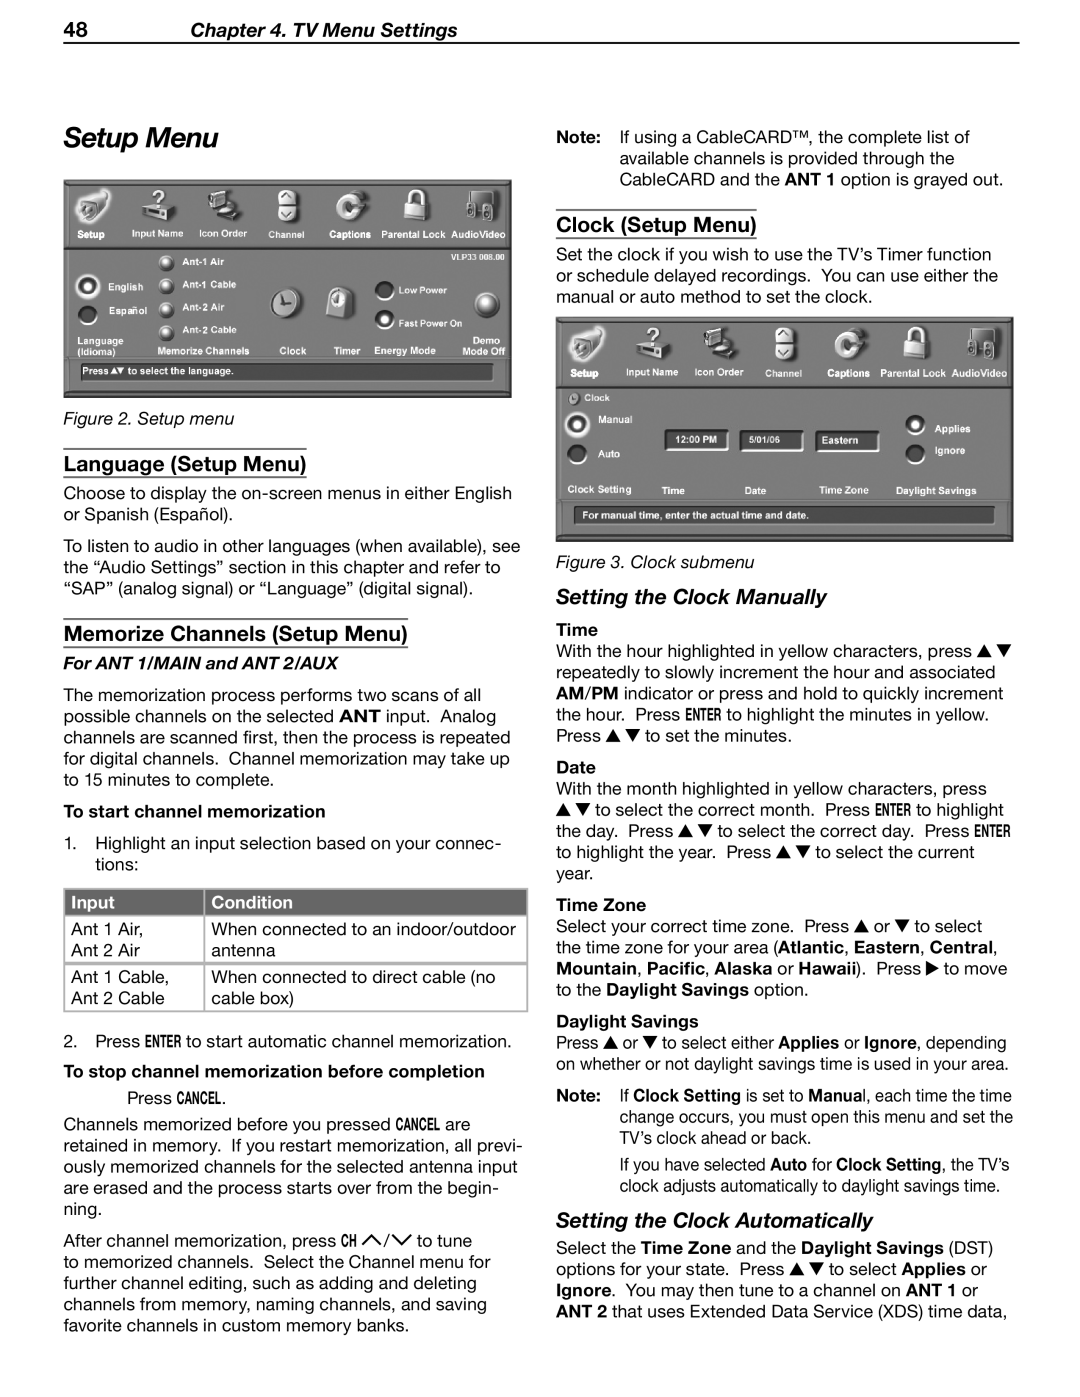 Mitsubishi Electronics LT-37131 Language Setup Menu, Memorize Channels Setup Menu, Clock Setup Menu, TV Menu Settings 